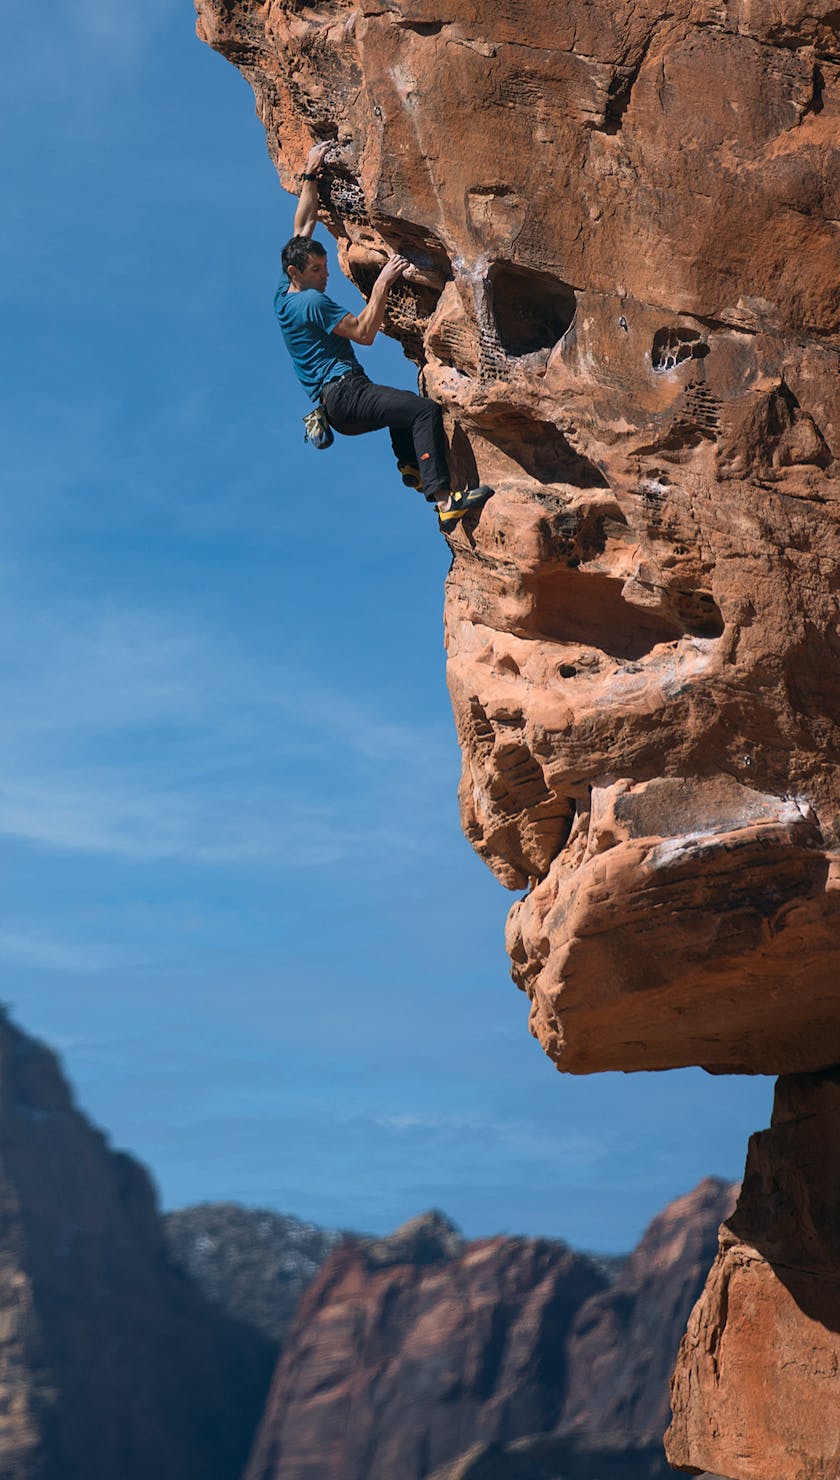 BD Athlete Alex Honnold bouldering in Nevada, USA